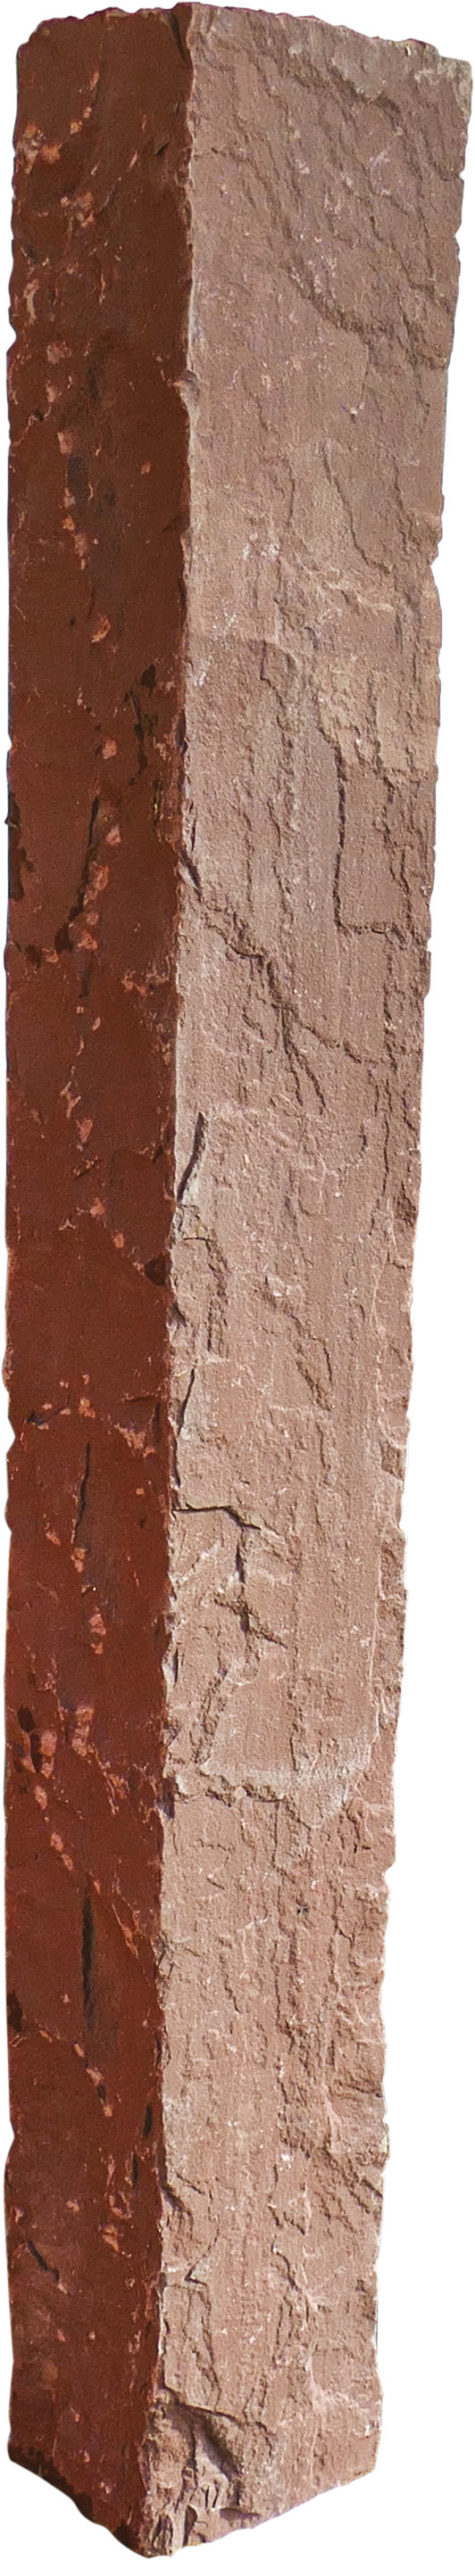 deevert - palissade en pierre naturelle – grès - 05